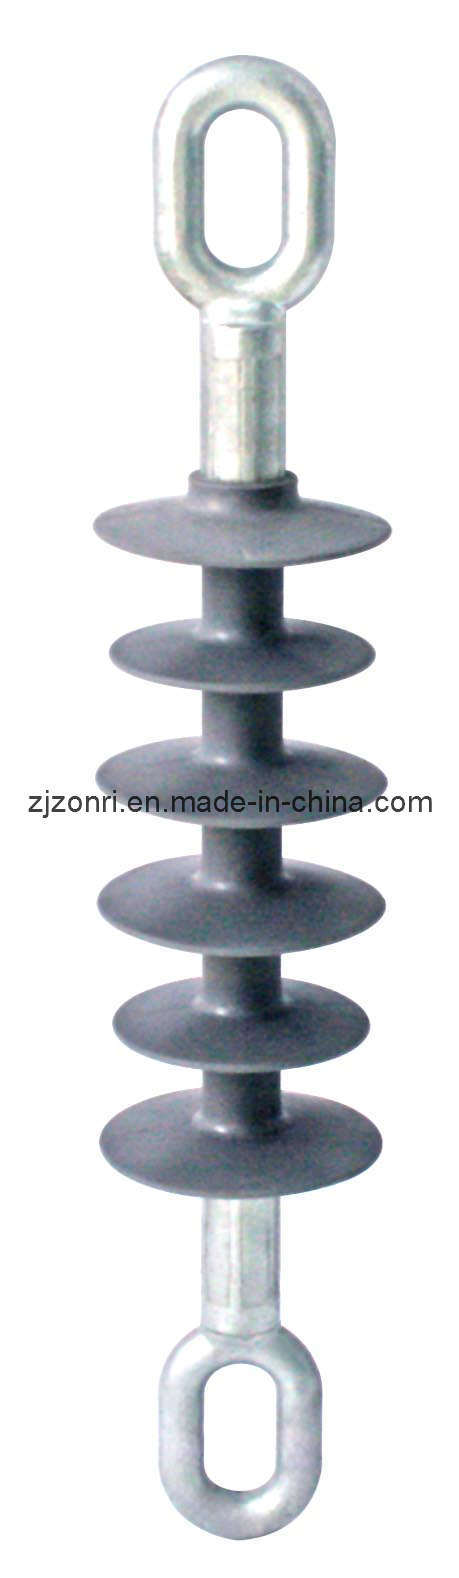 Composite Tension Insulator /Composite Suspension Insulator (FXBW-24/70 (EE)) 24kv 70kn